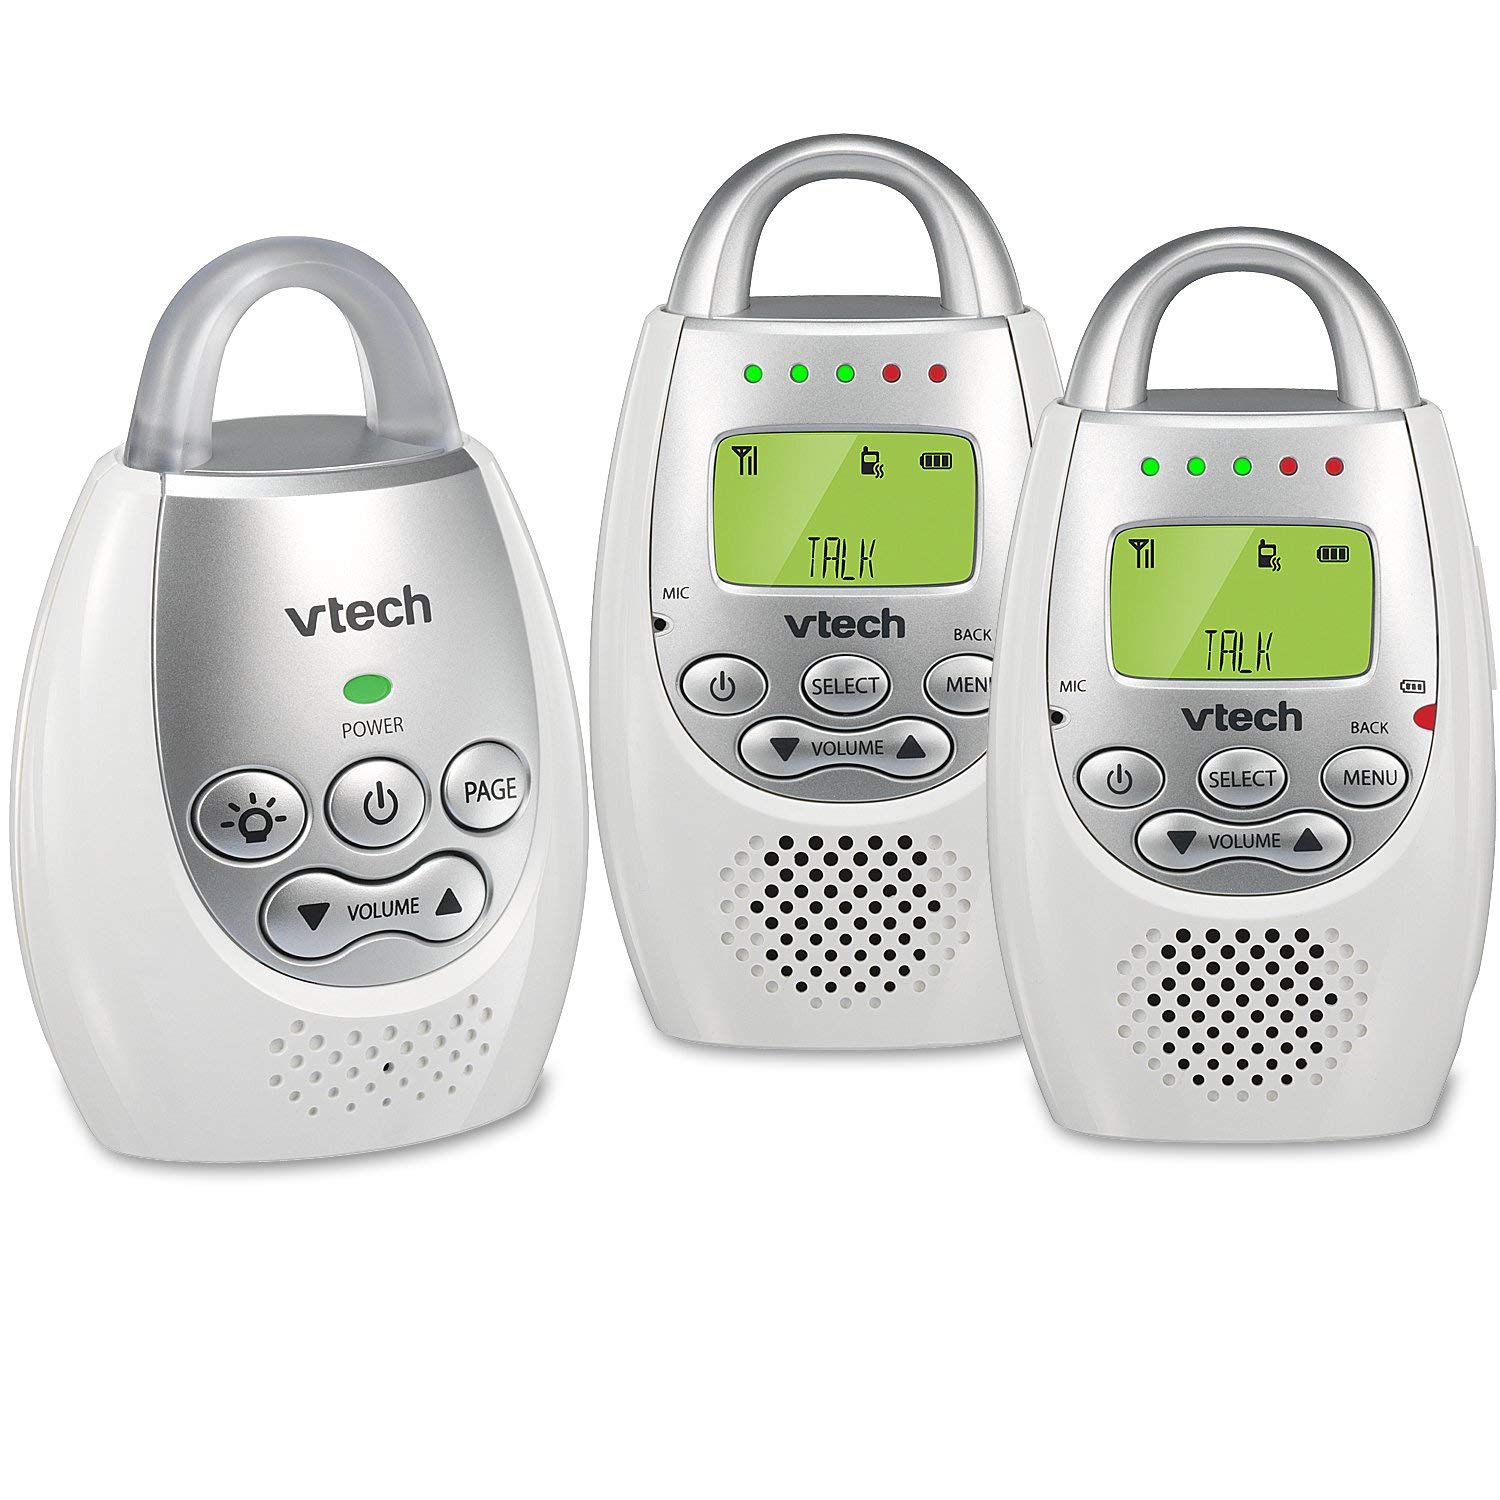 VTech DM221-2 Sound Sensitive LED Baby Monitor